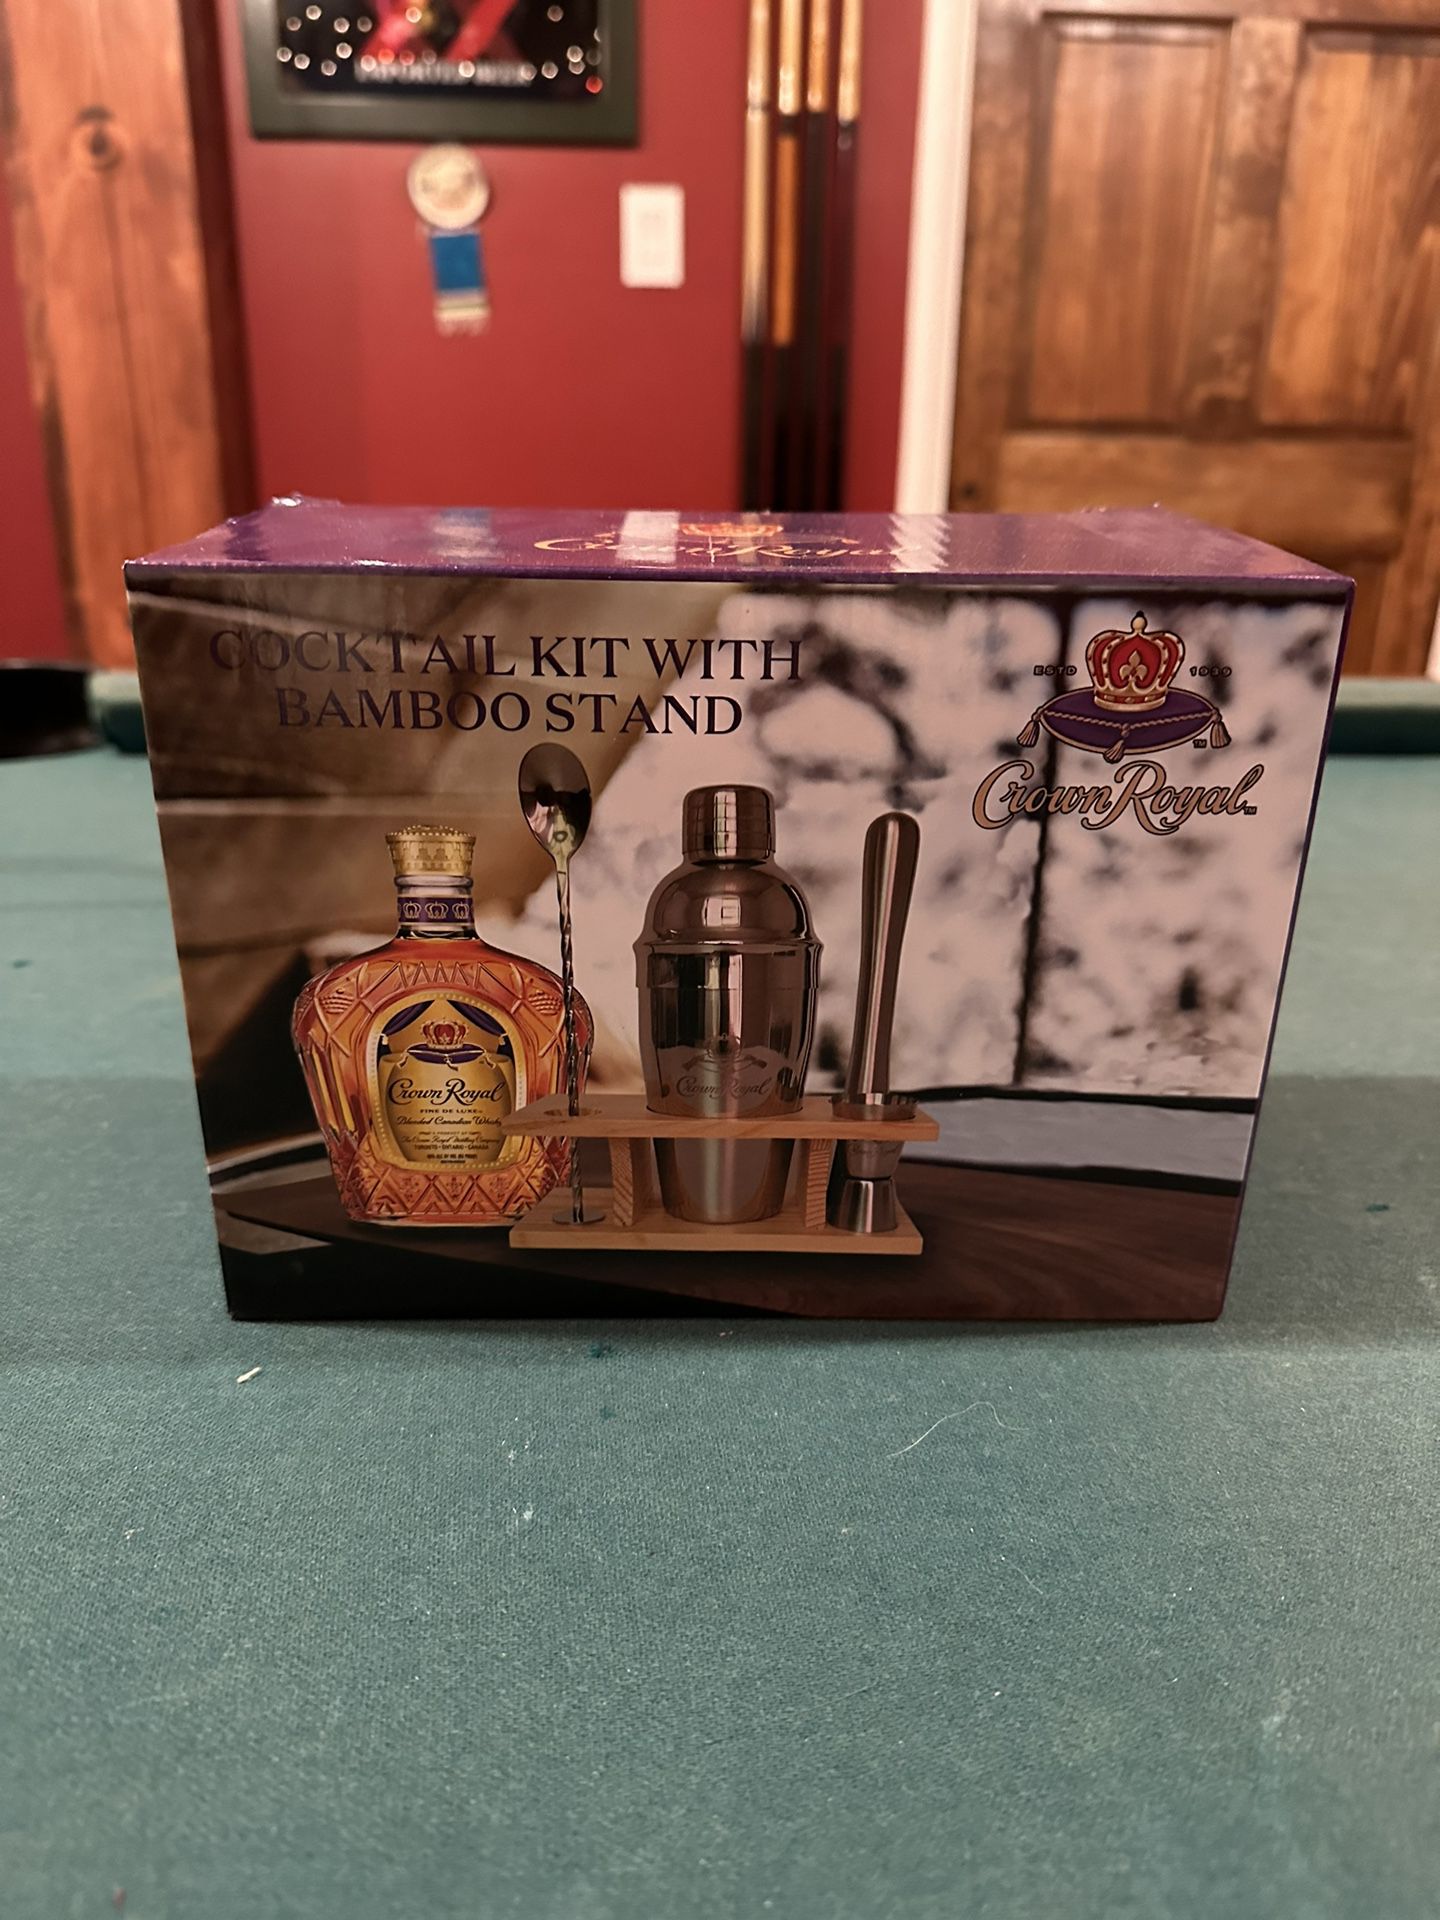 Crown Royal Cocktail Kit